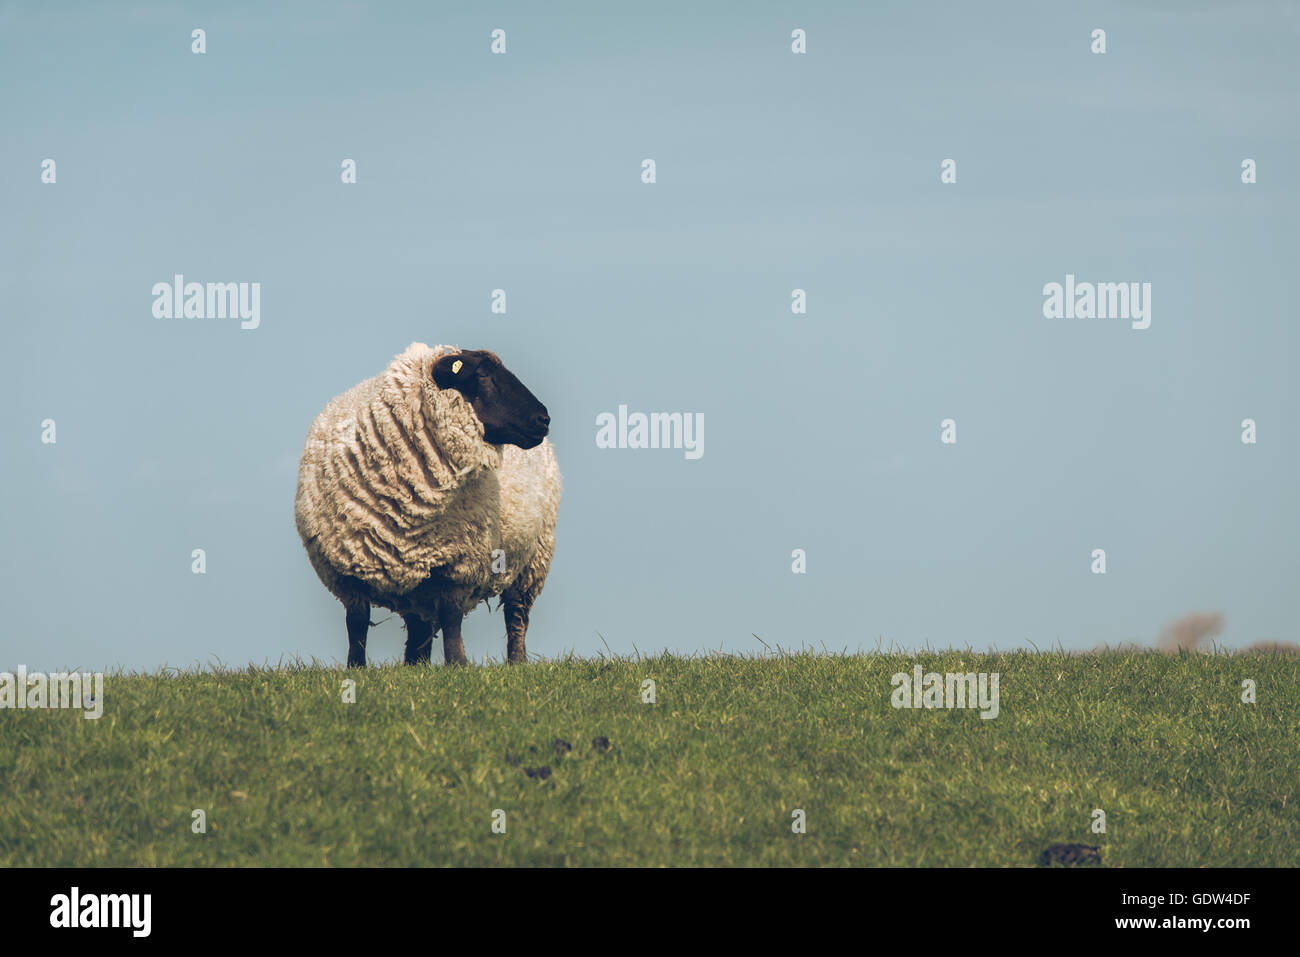 Sheep on dike Stock Photo